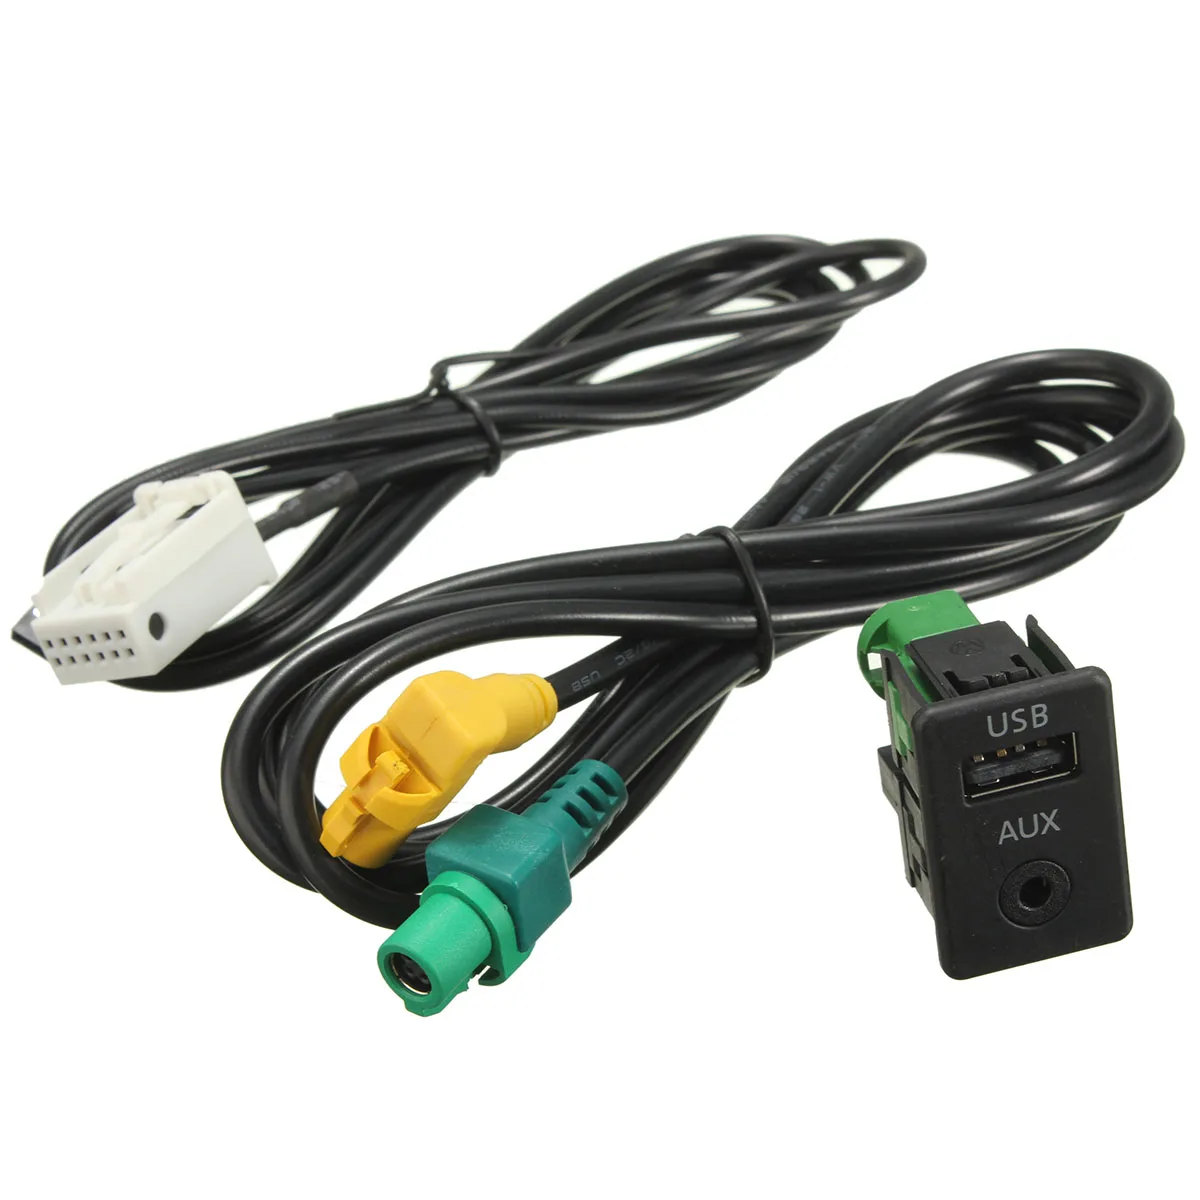 Aux переключатель и USB кабель адаптер для BMW 3 5 серии E87 E90 E91 E92 X5 X6